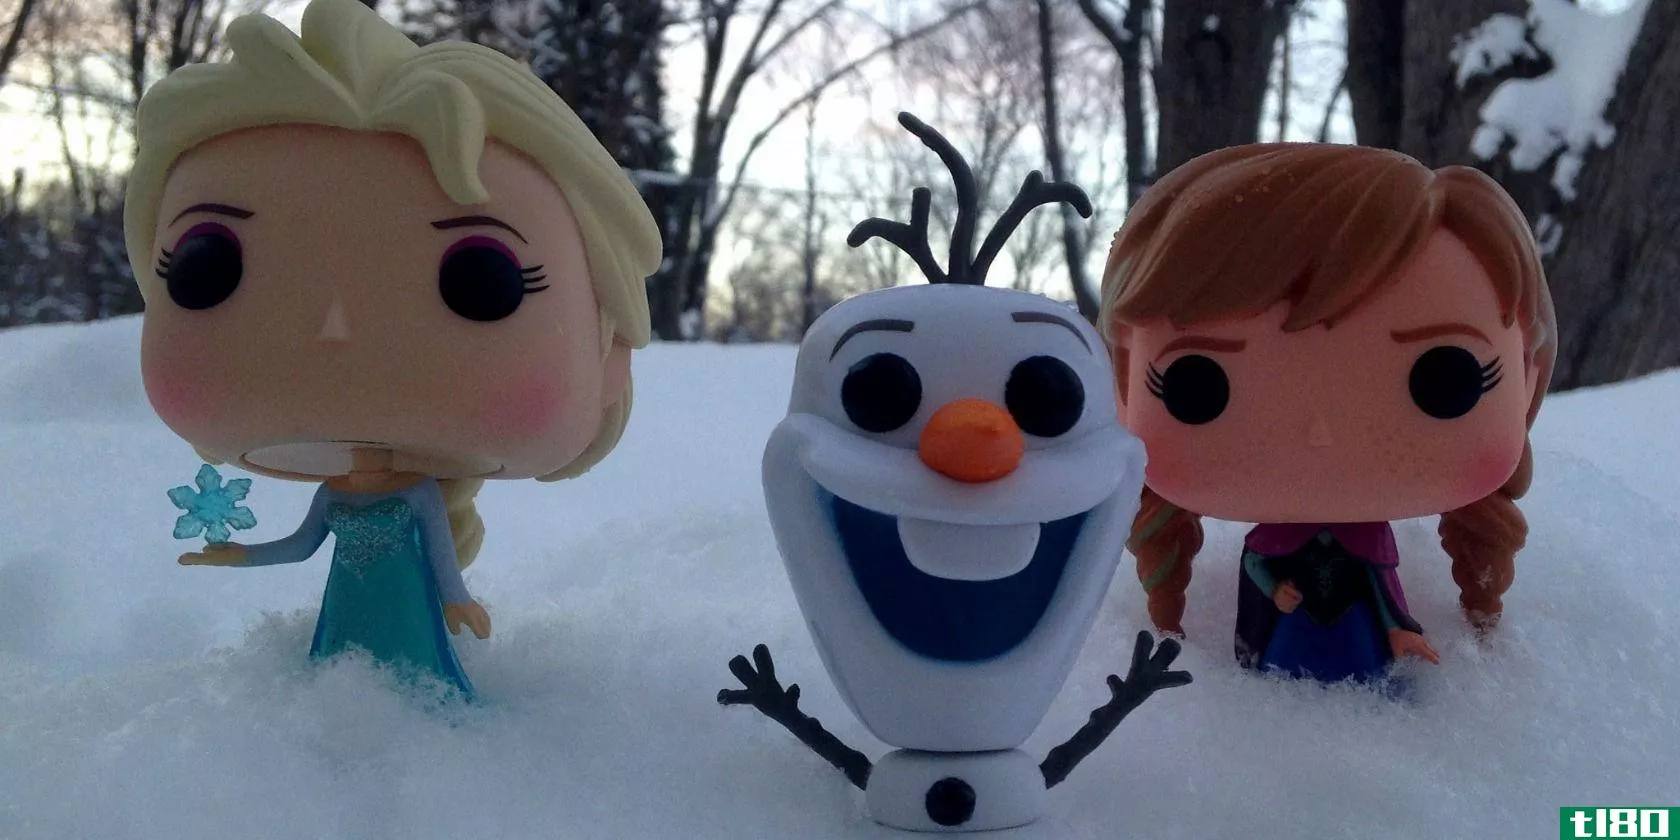 frozen-toys-snow-scene